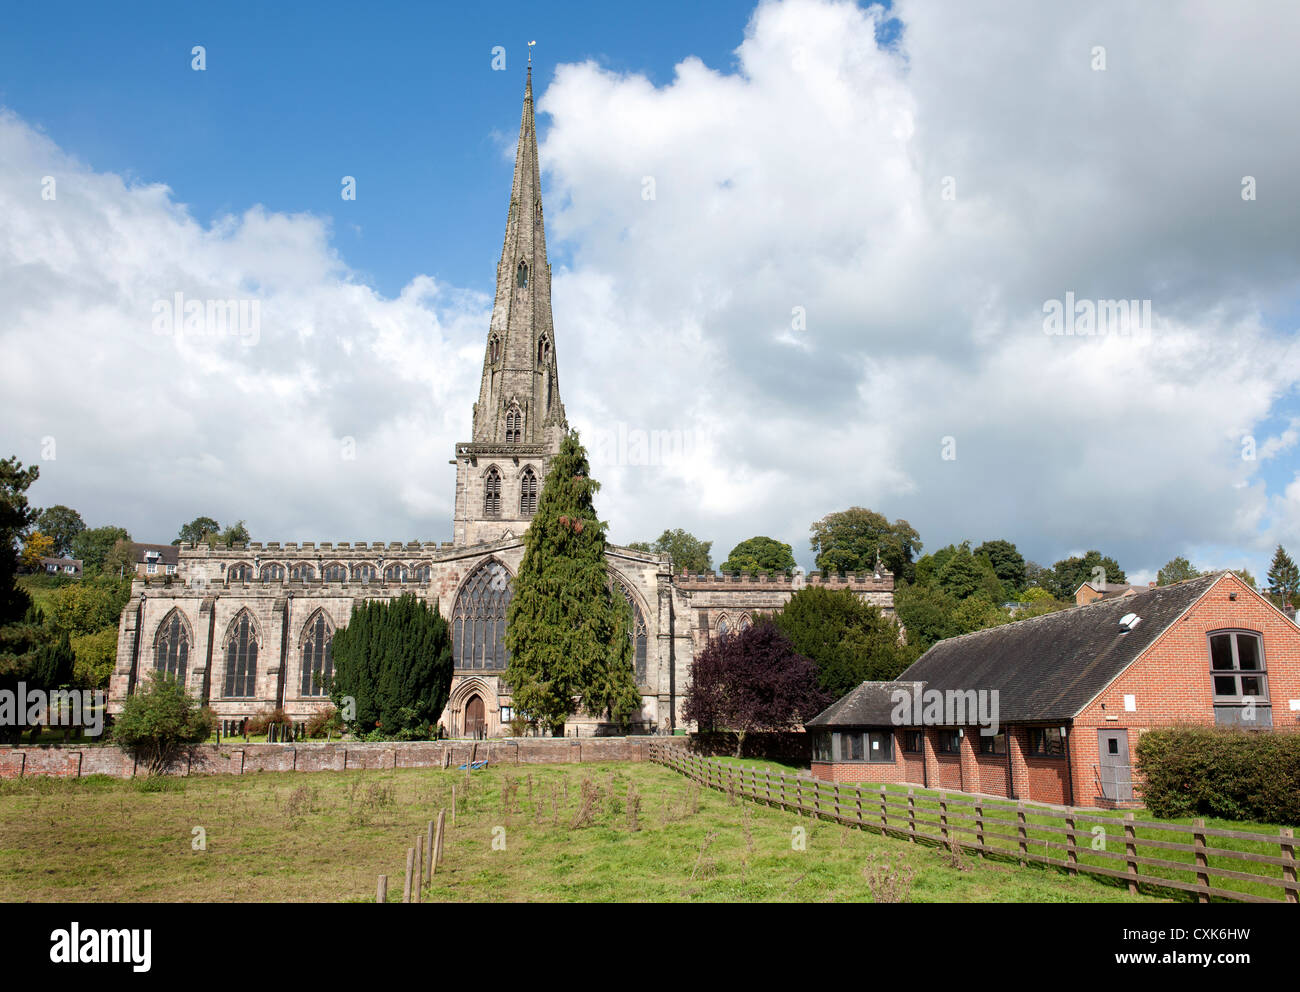 St Oswald's Church, Ashbourne, Derbyshire, UK. Stock Photo